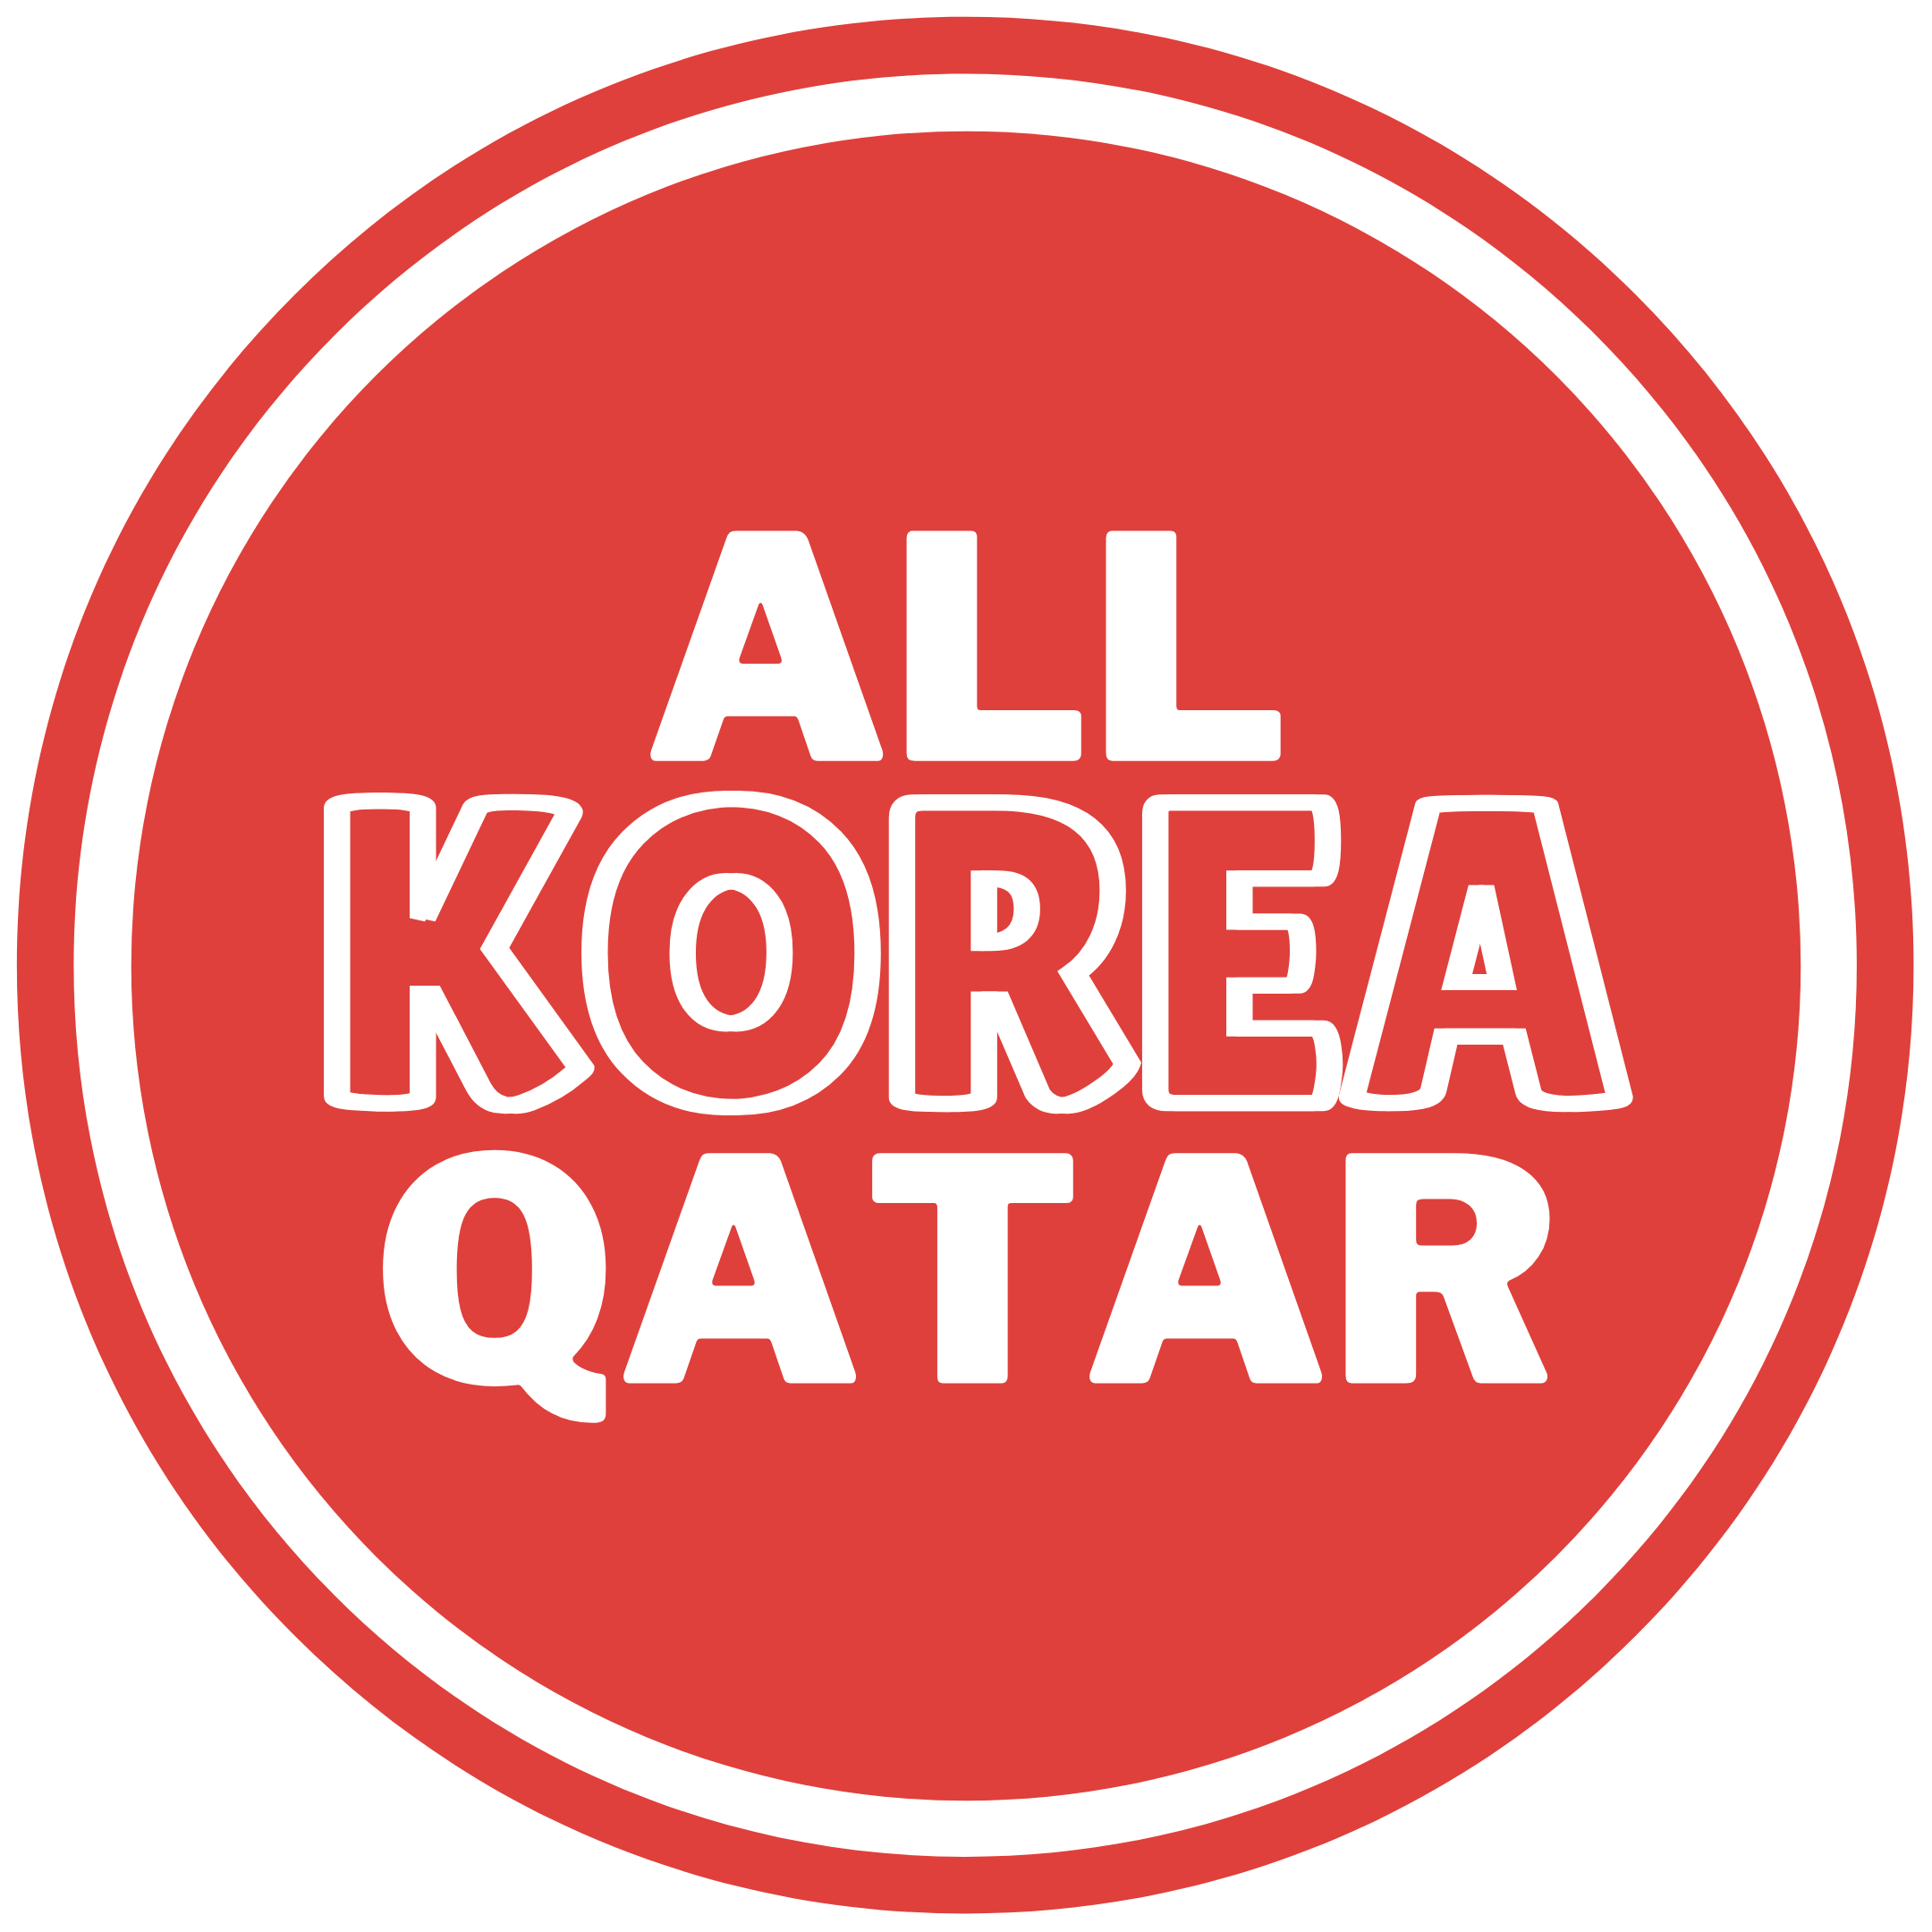 All Korea Qatar